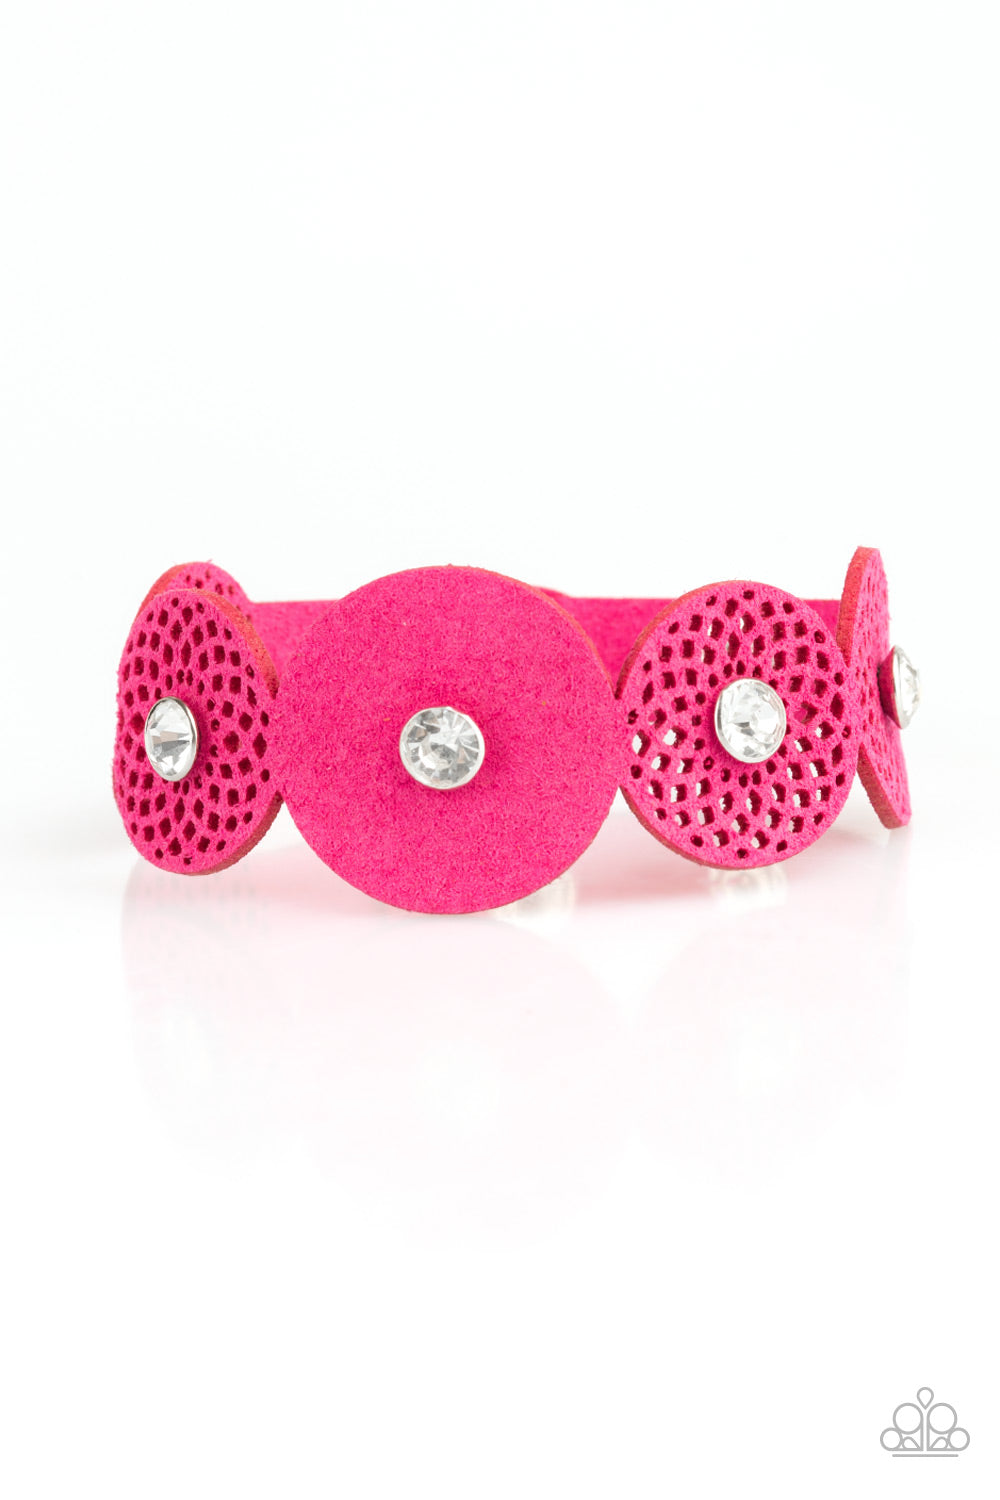 Poppin Popstar - Pink - Spiffy Chick Jewelry